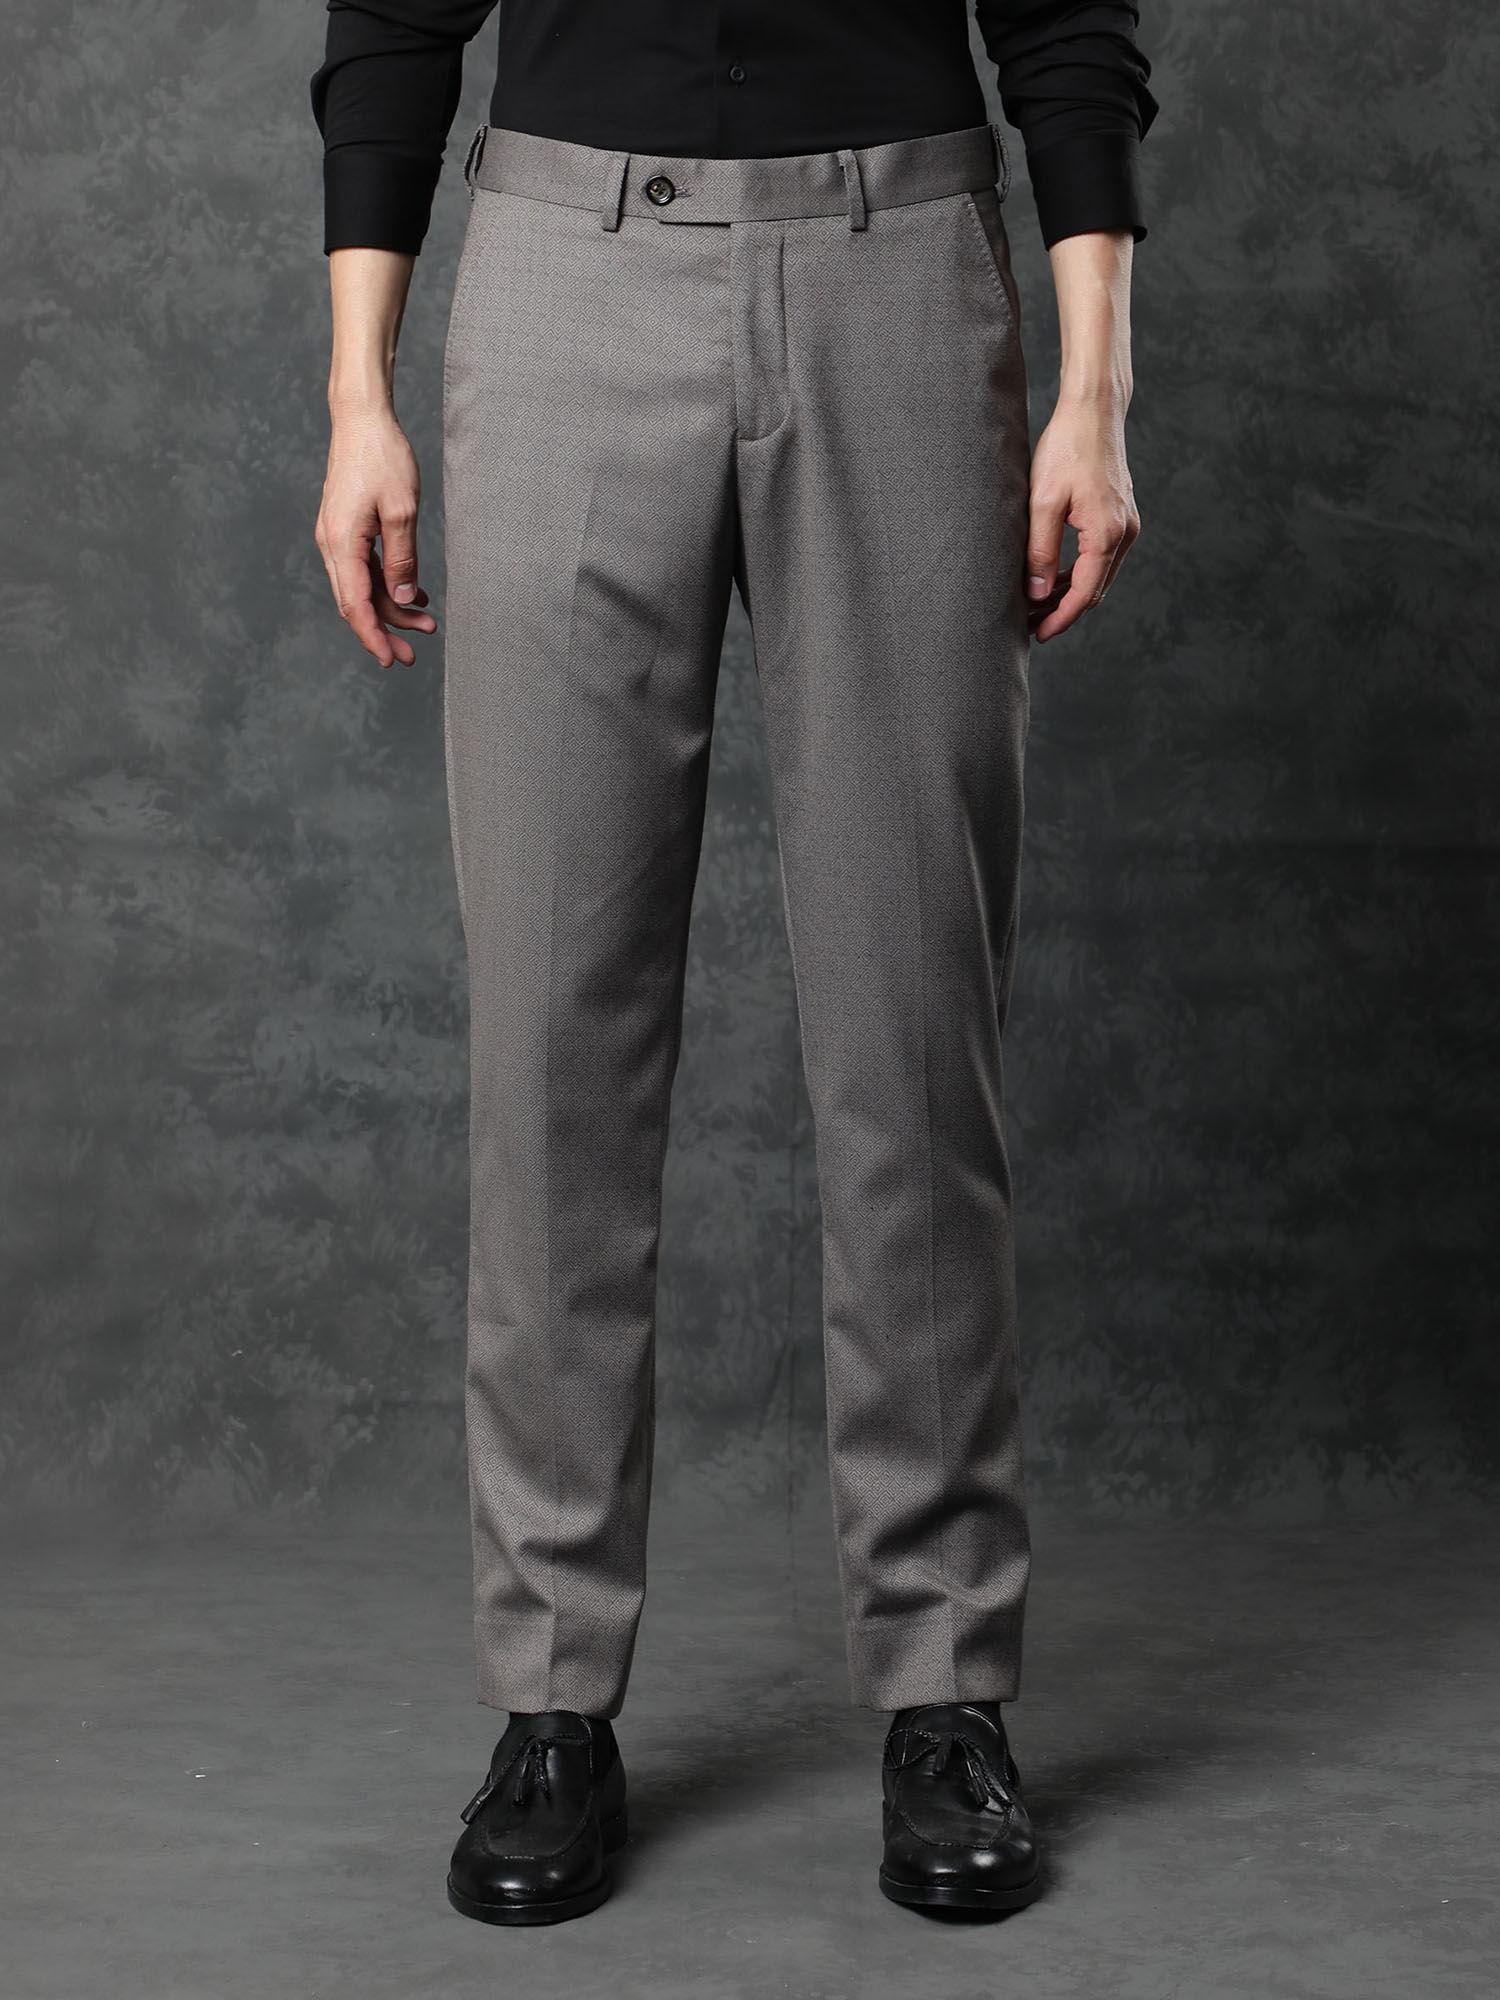 Daxol Primary Grey Premium Textured Trouser